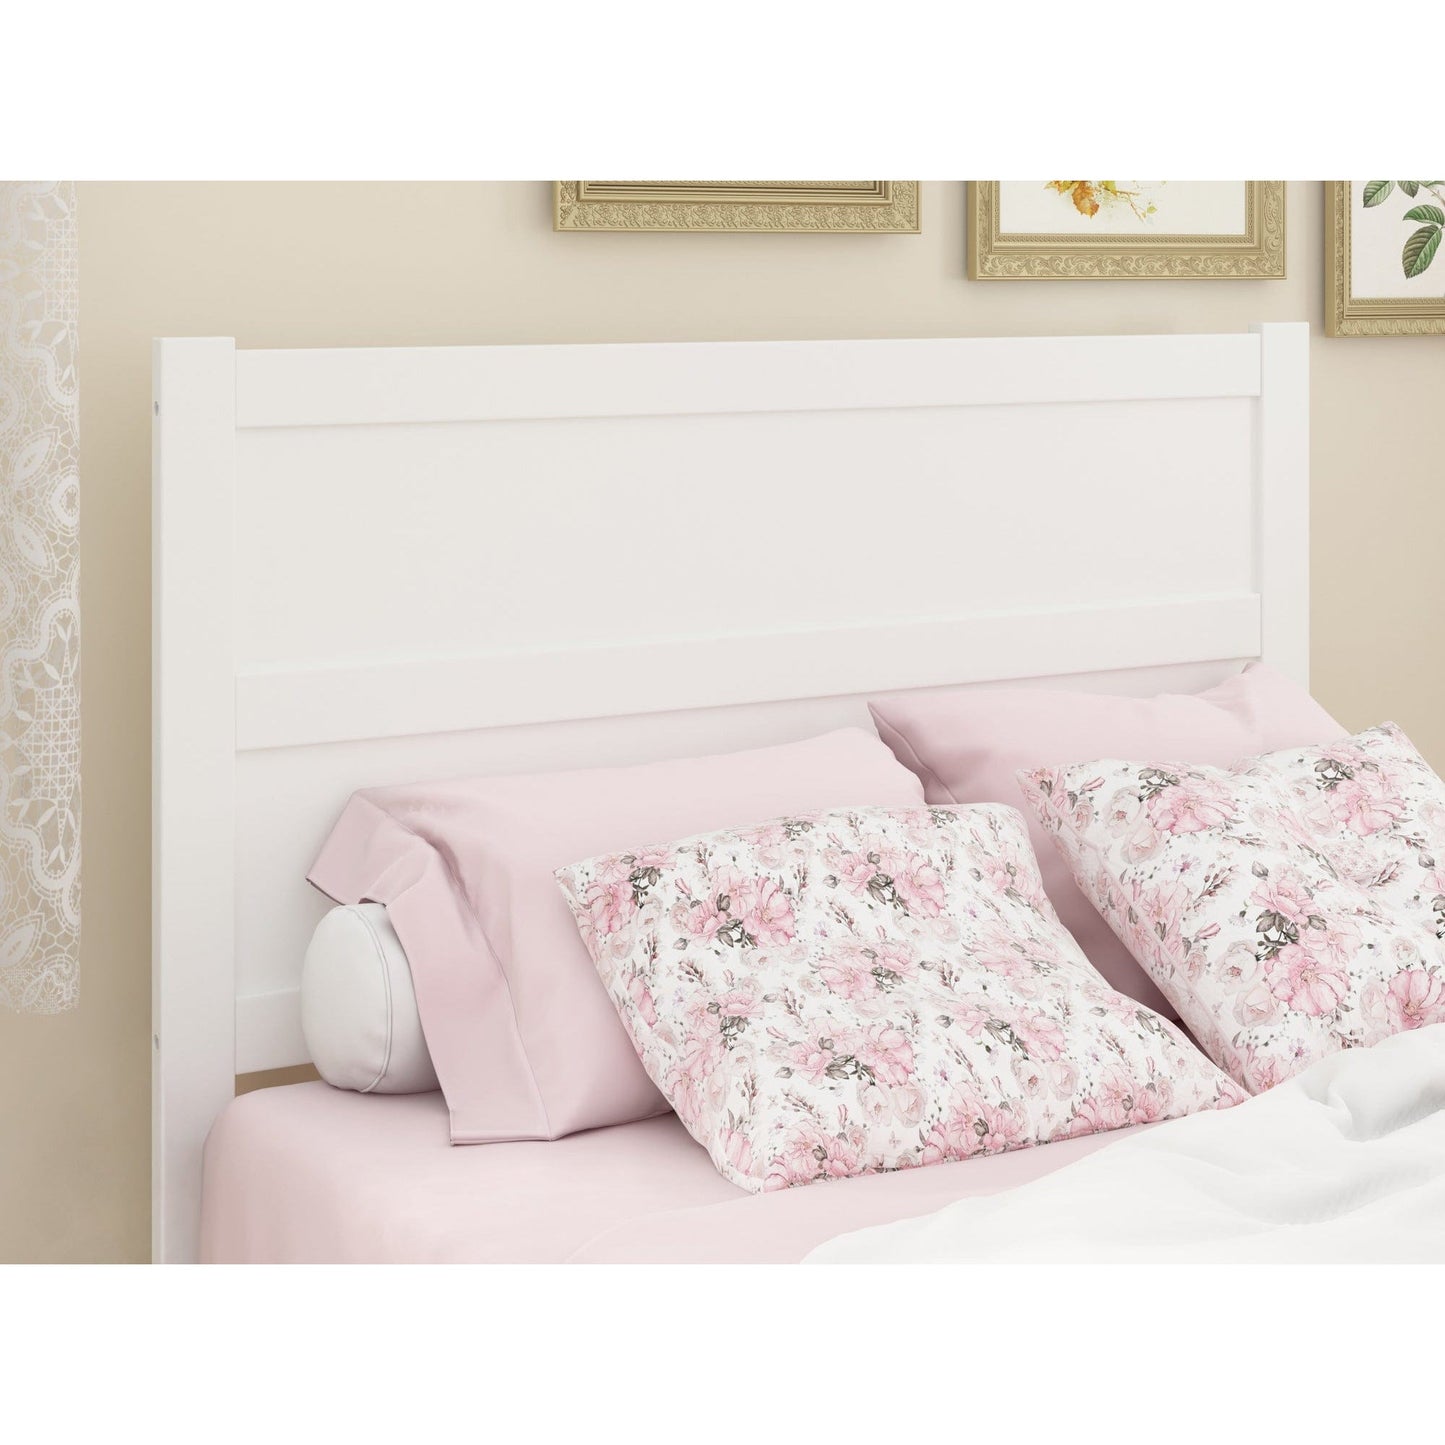 AFI Furnishings NoHo Full Bed in White AG9110032